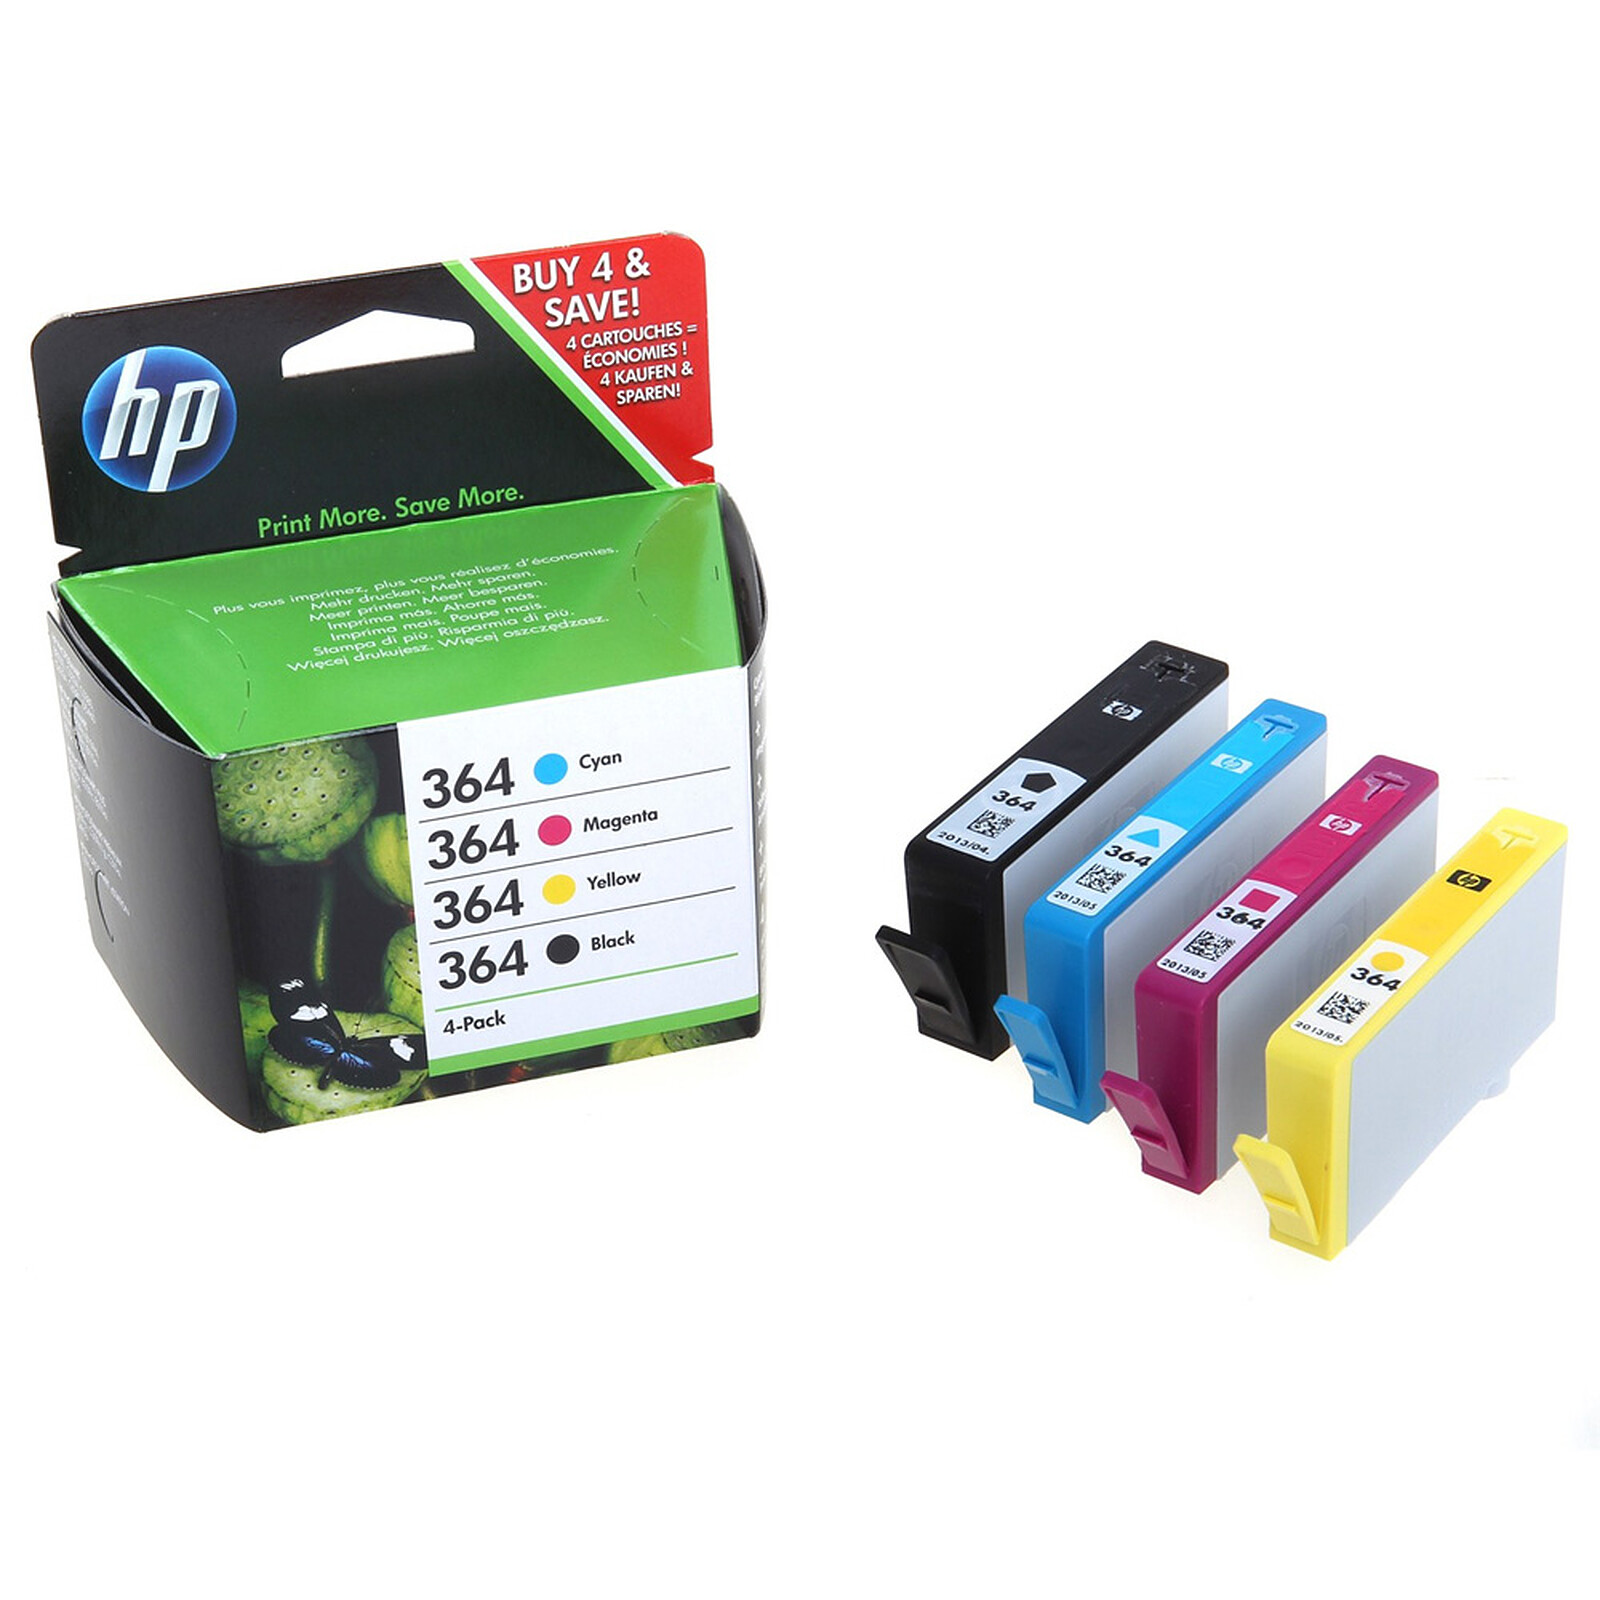 HP 934XL/935XL Noir/3 couleurs (X4E14AE) - Cartouche imprimante - LDLC